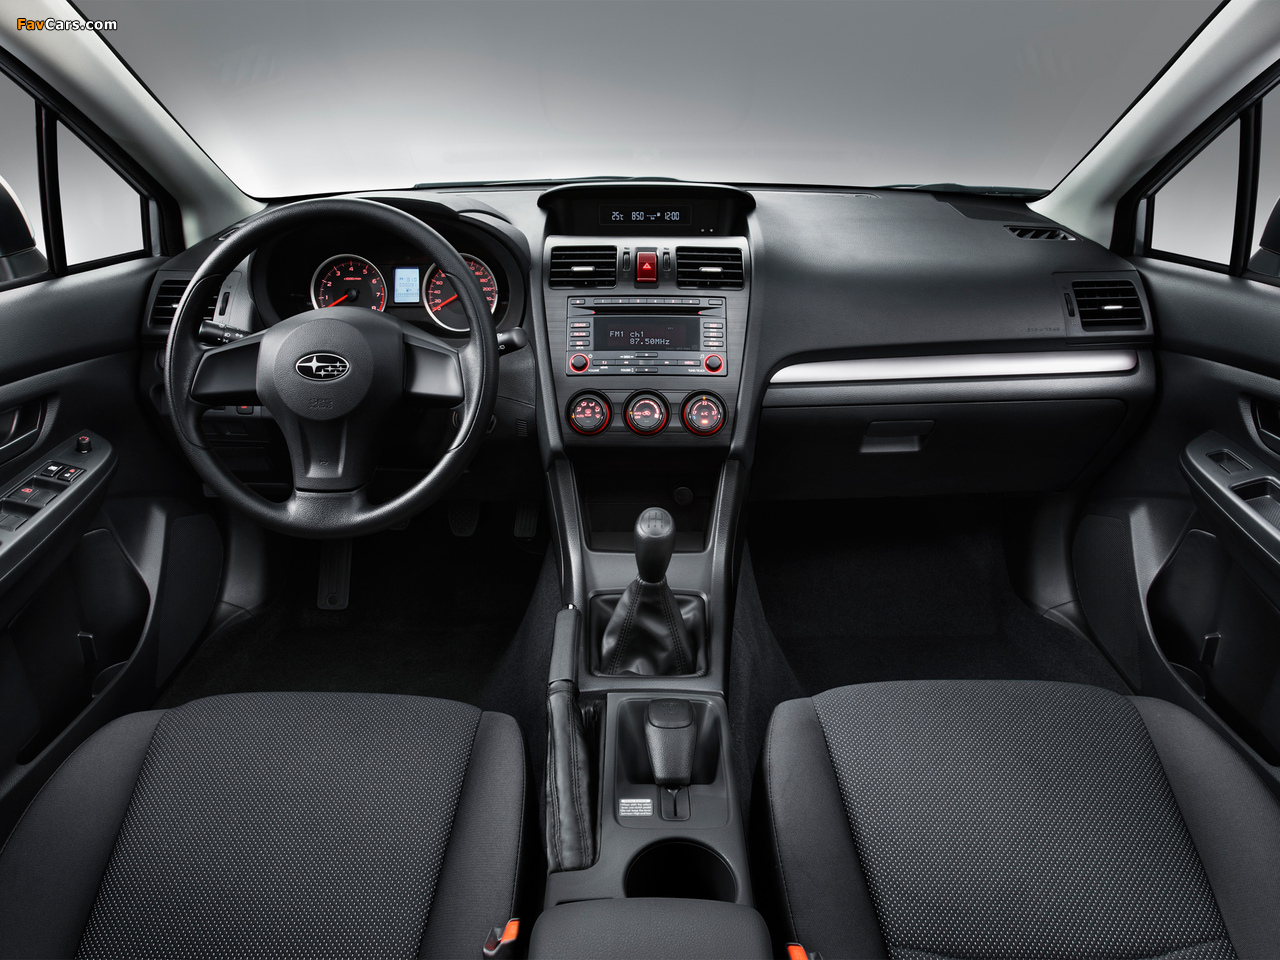 Subaru Impreza Hatchback (GP) 2011 pictures (1280 x 960)